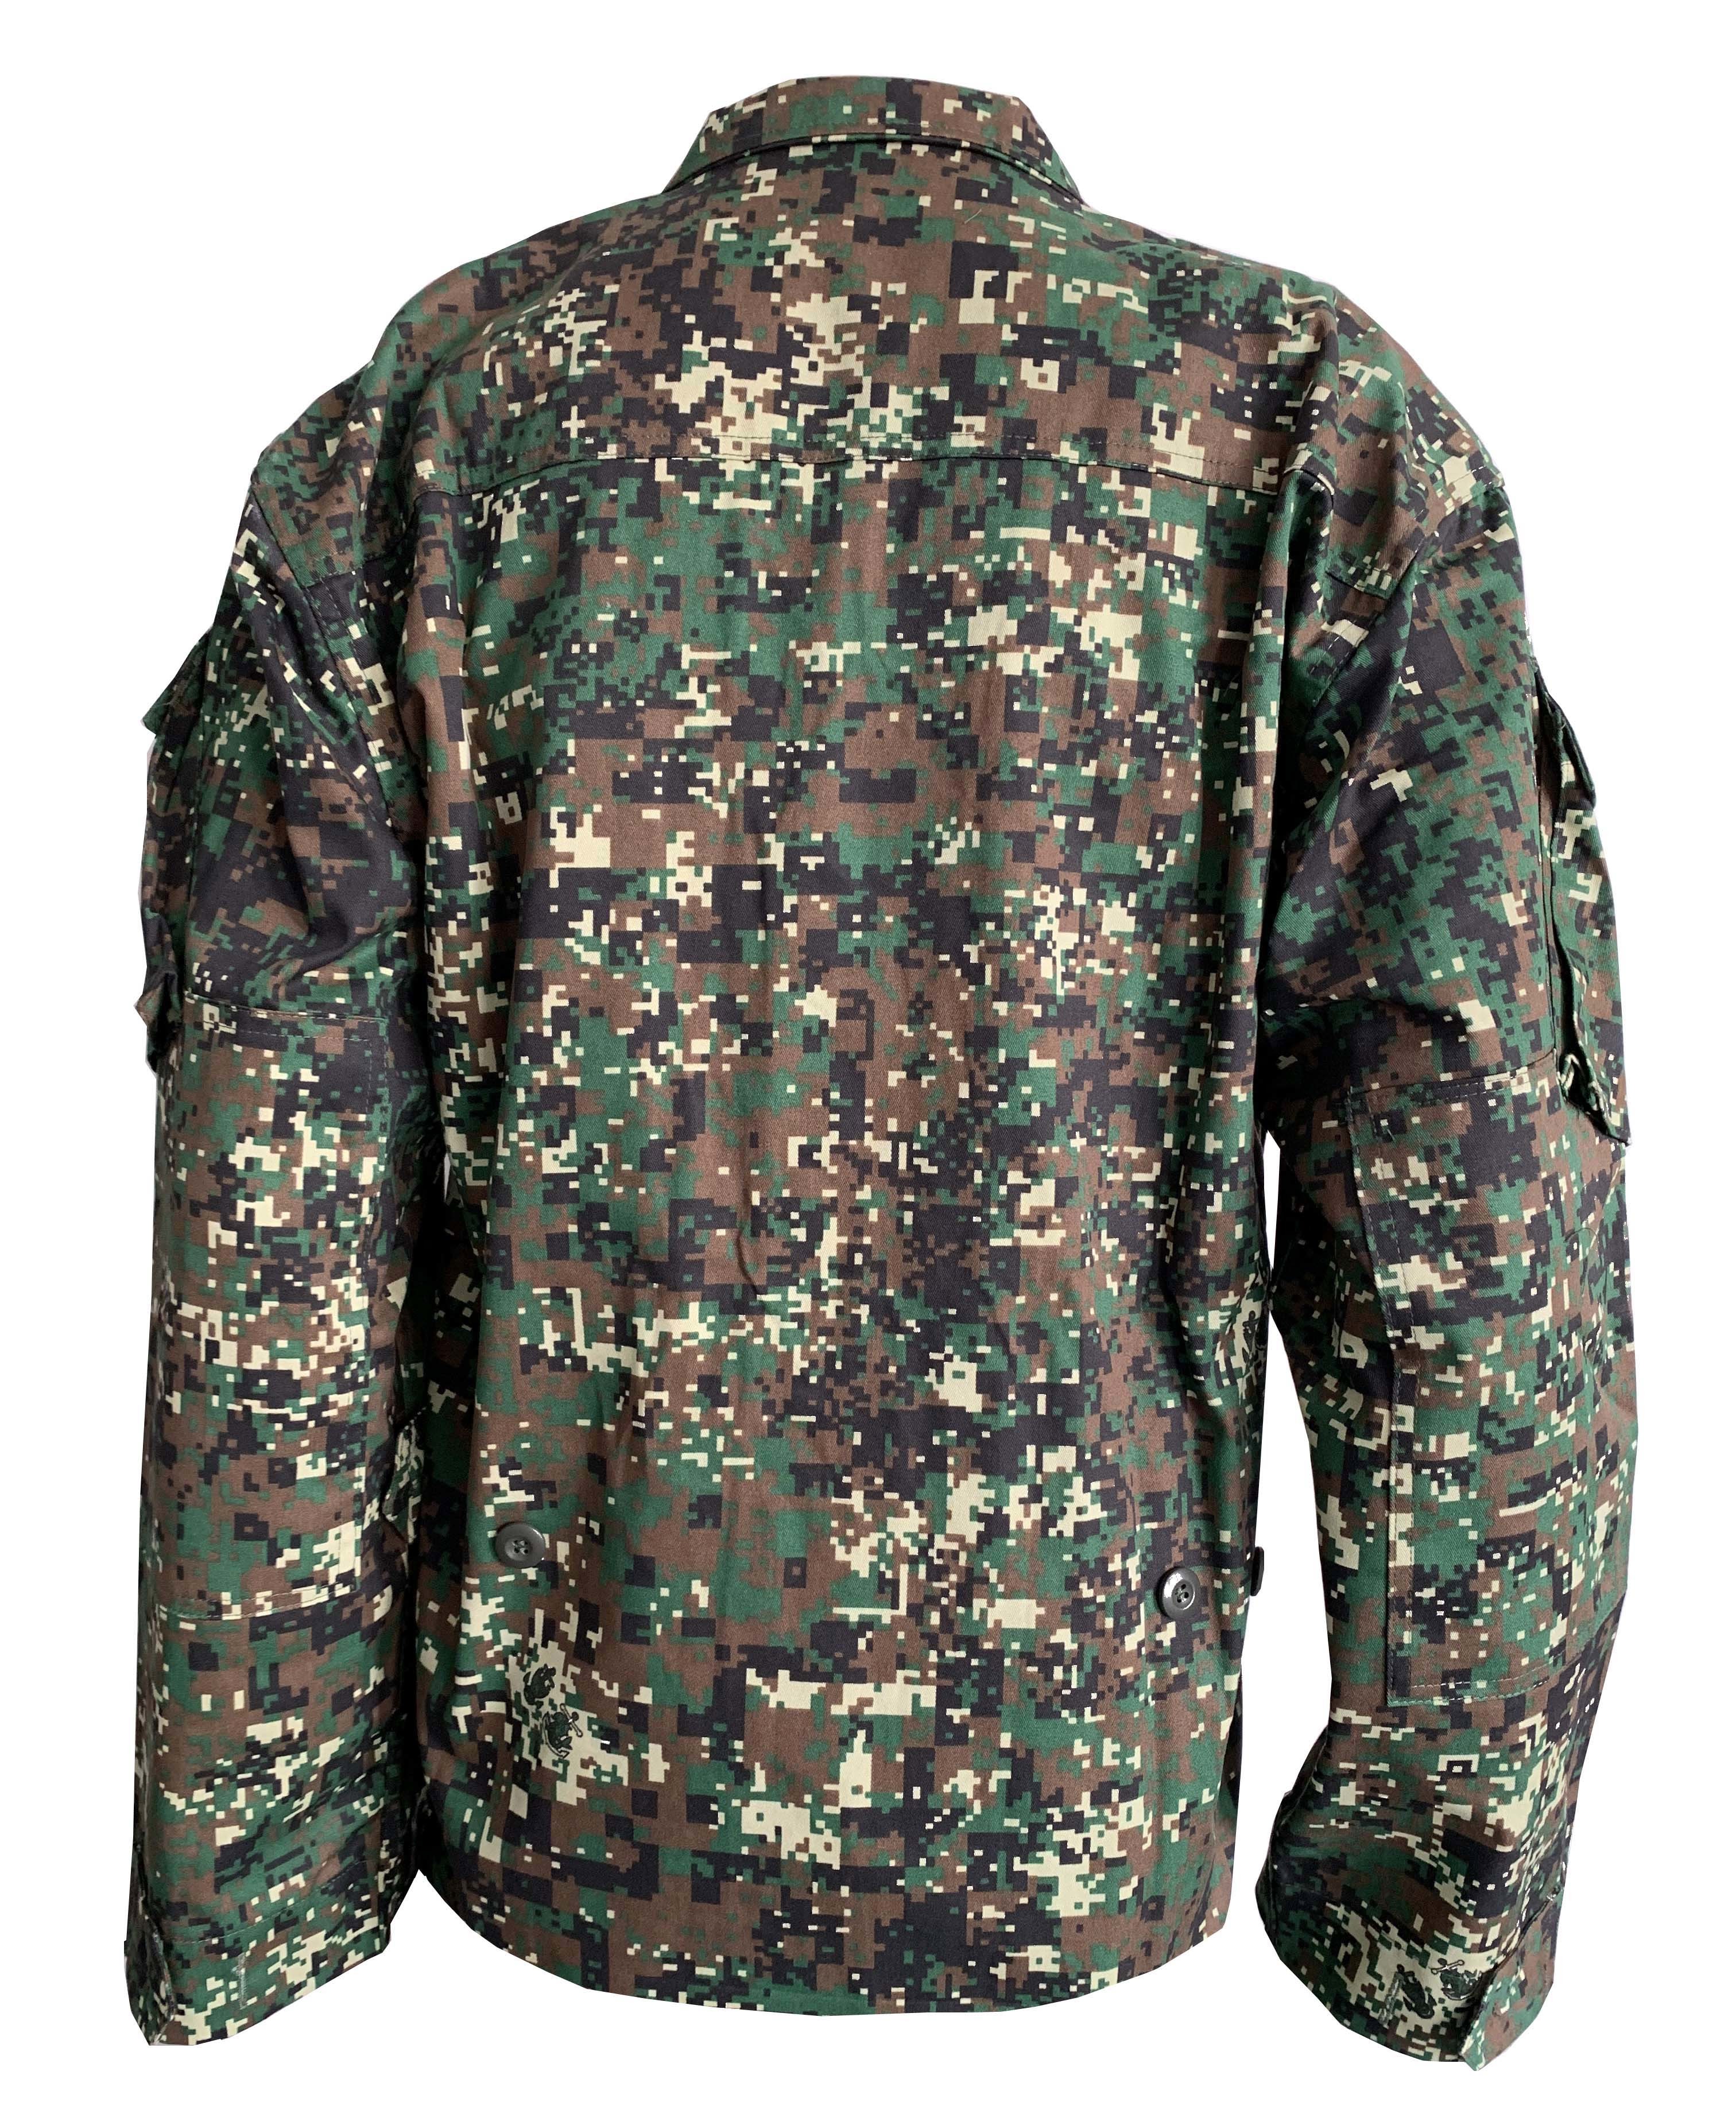 Army Digital Camo Uniform